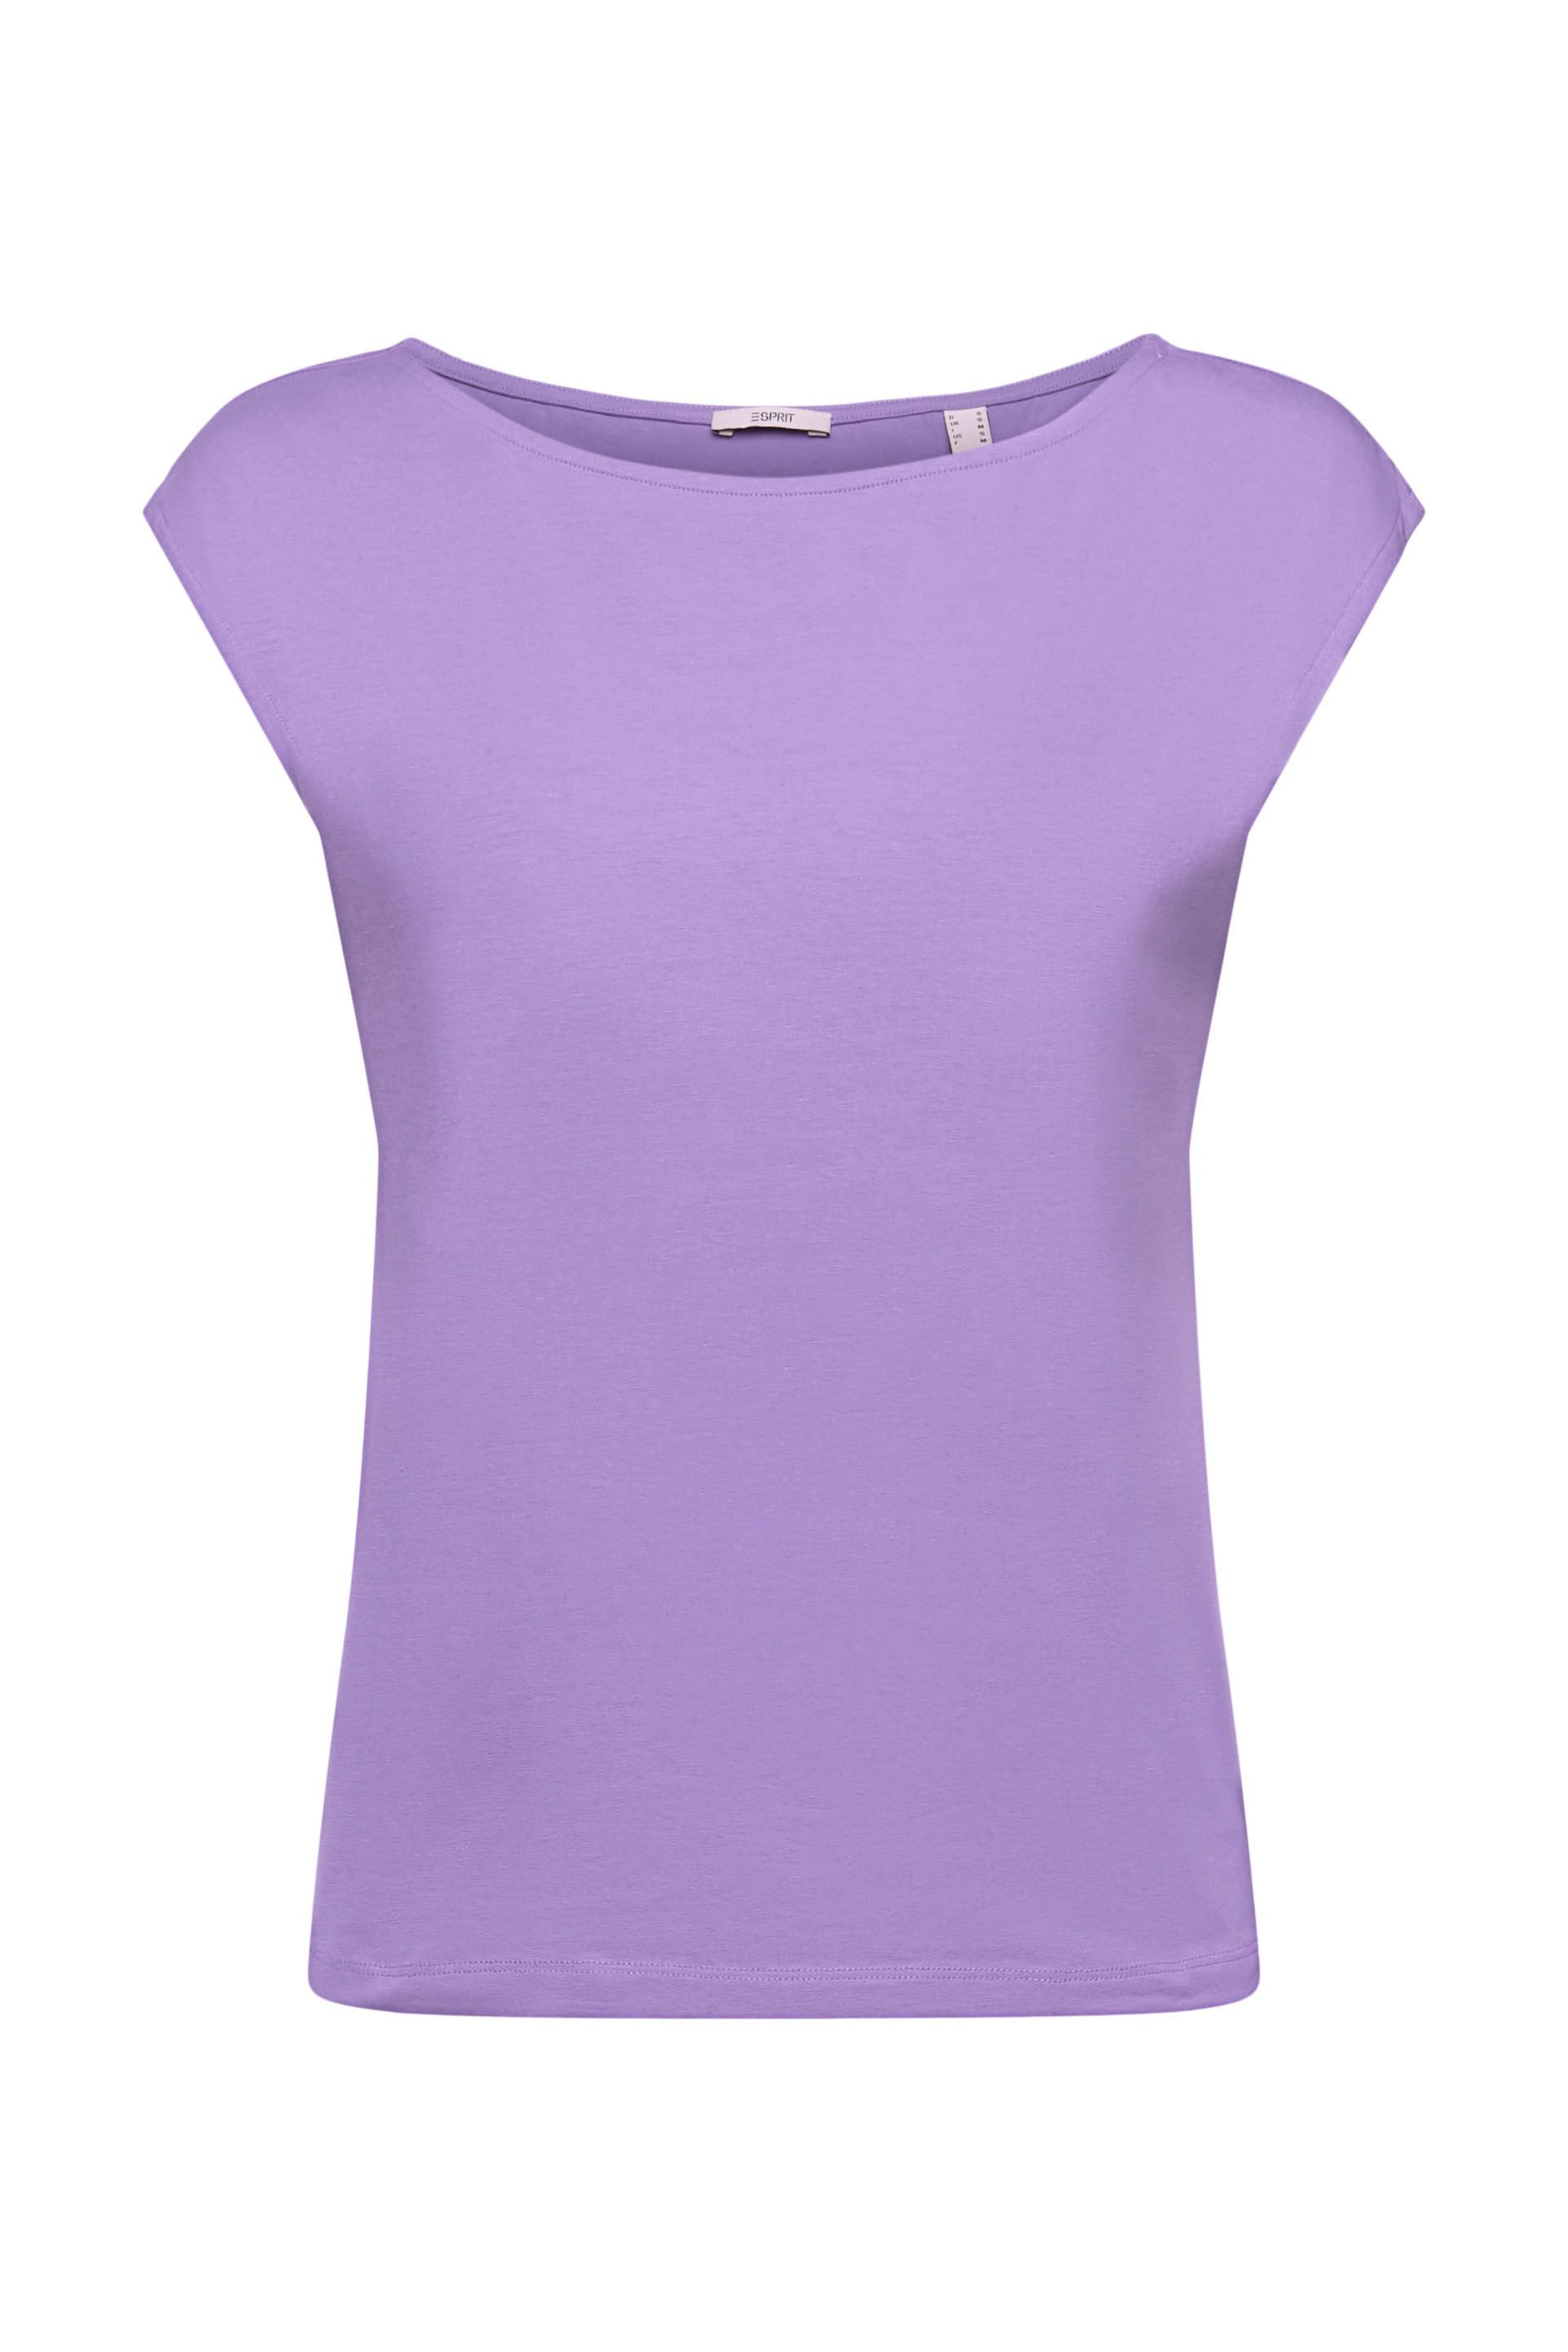 Esprit - T-shirt in cotone elasticizzato, Viola lilla, large image number 0